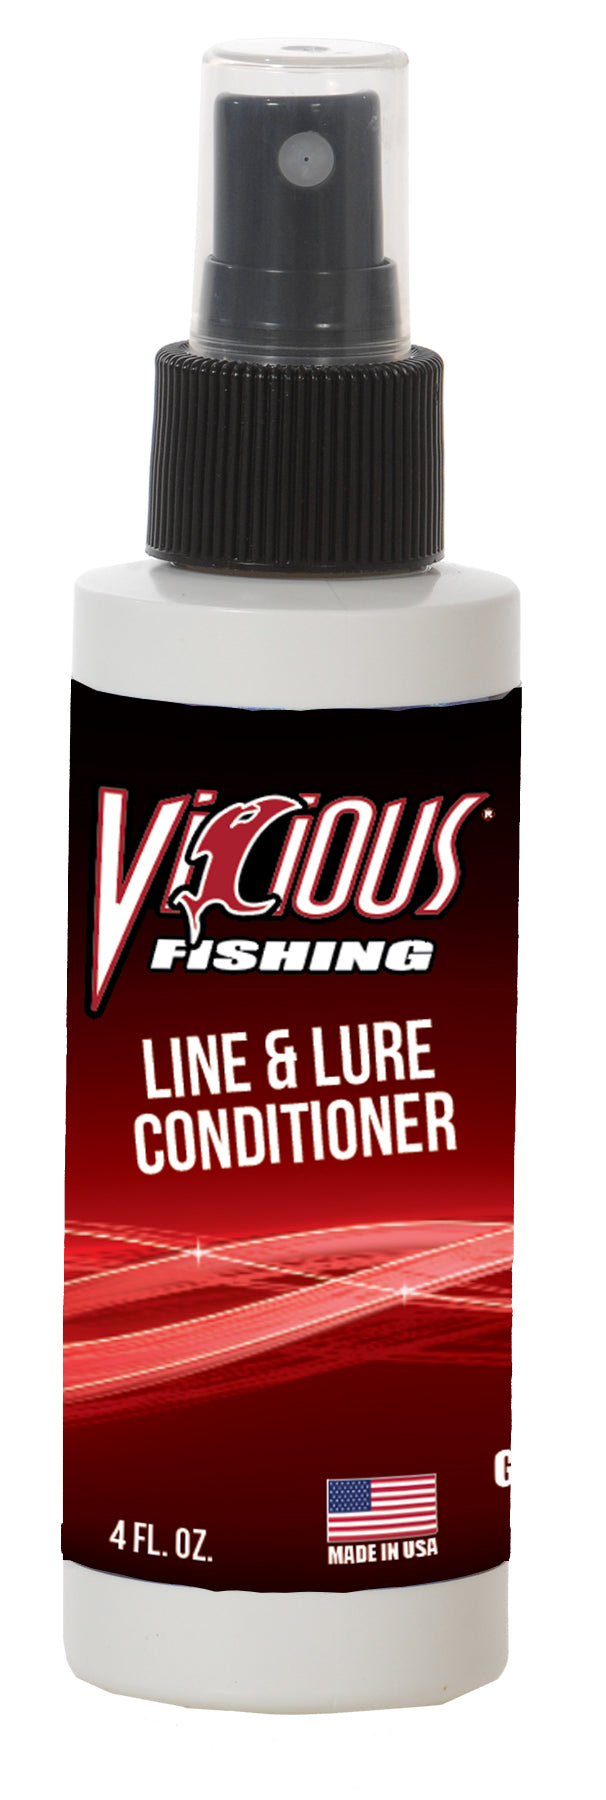 Vicious Monofilament Fishing Line 6lb 330yds VMCL6